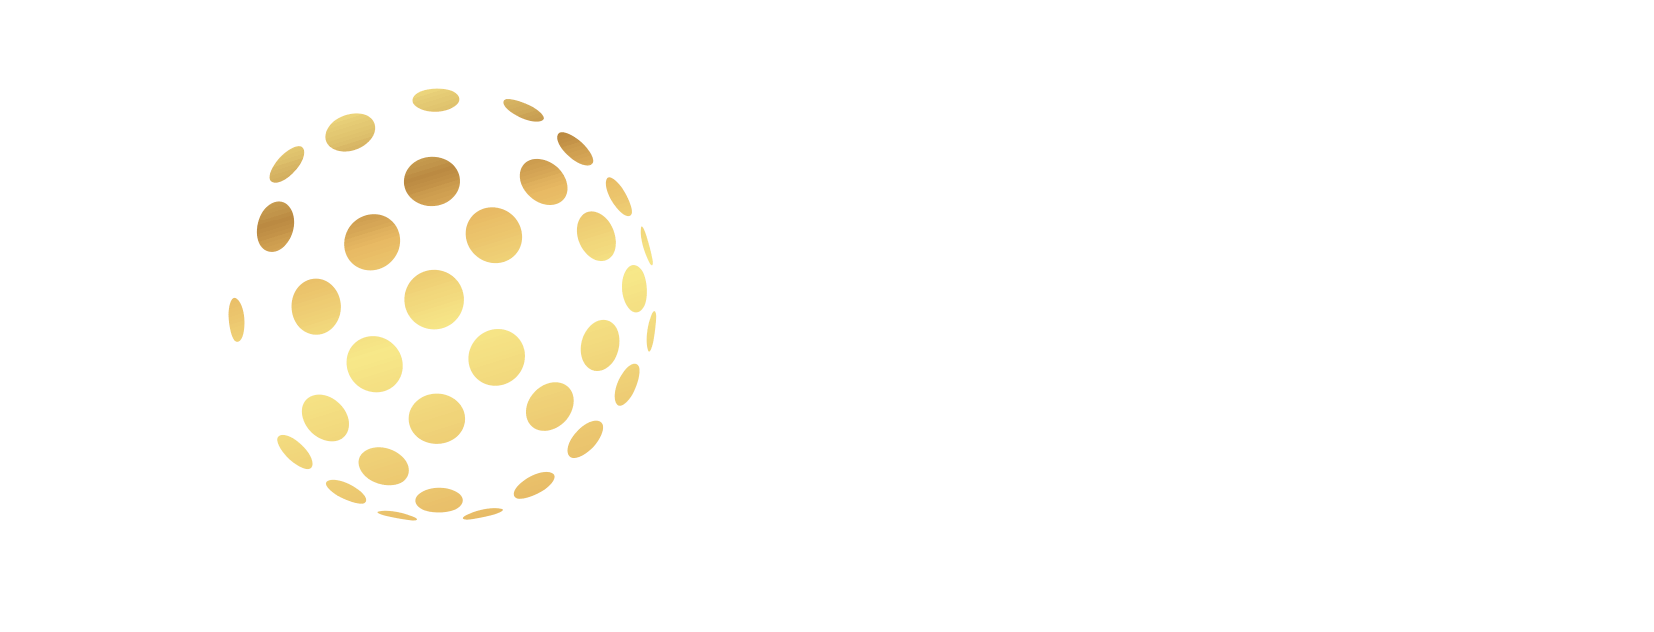 Atlantis Websites